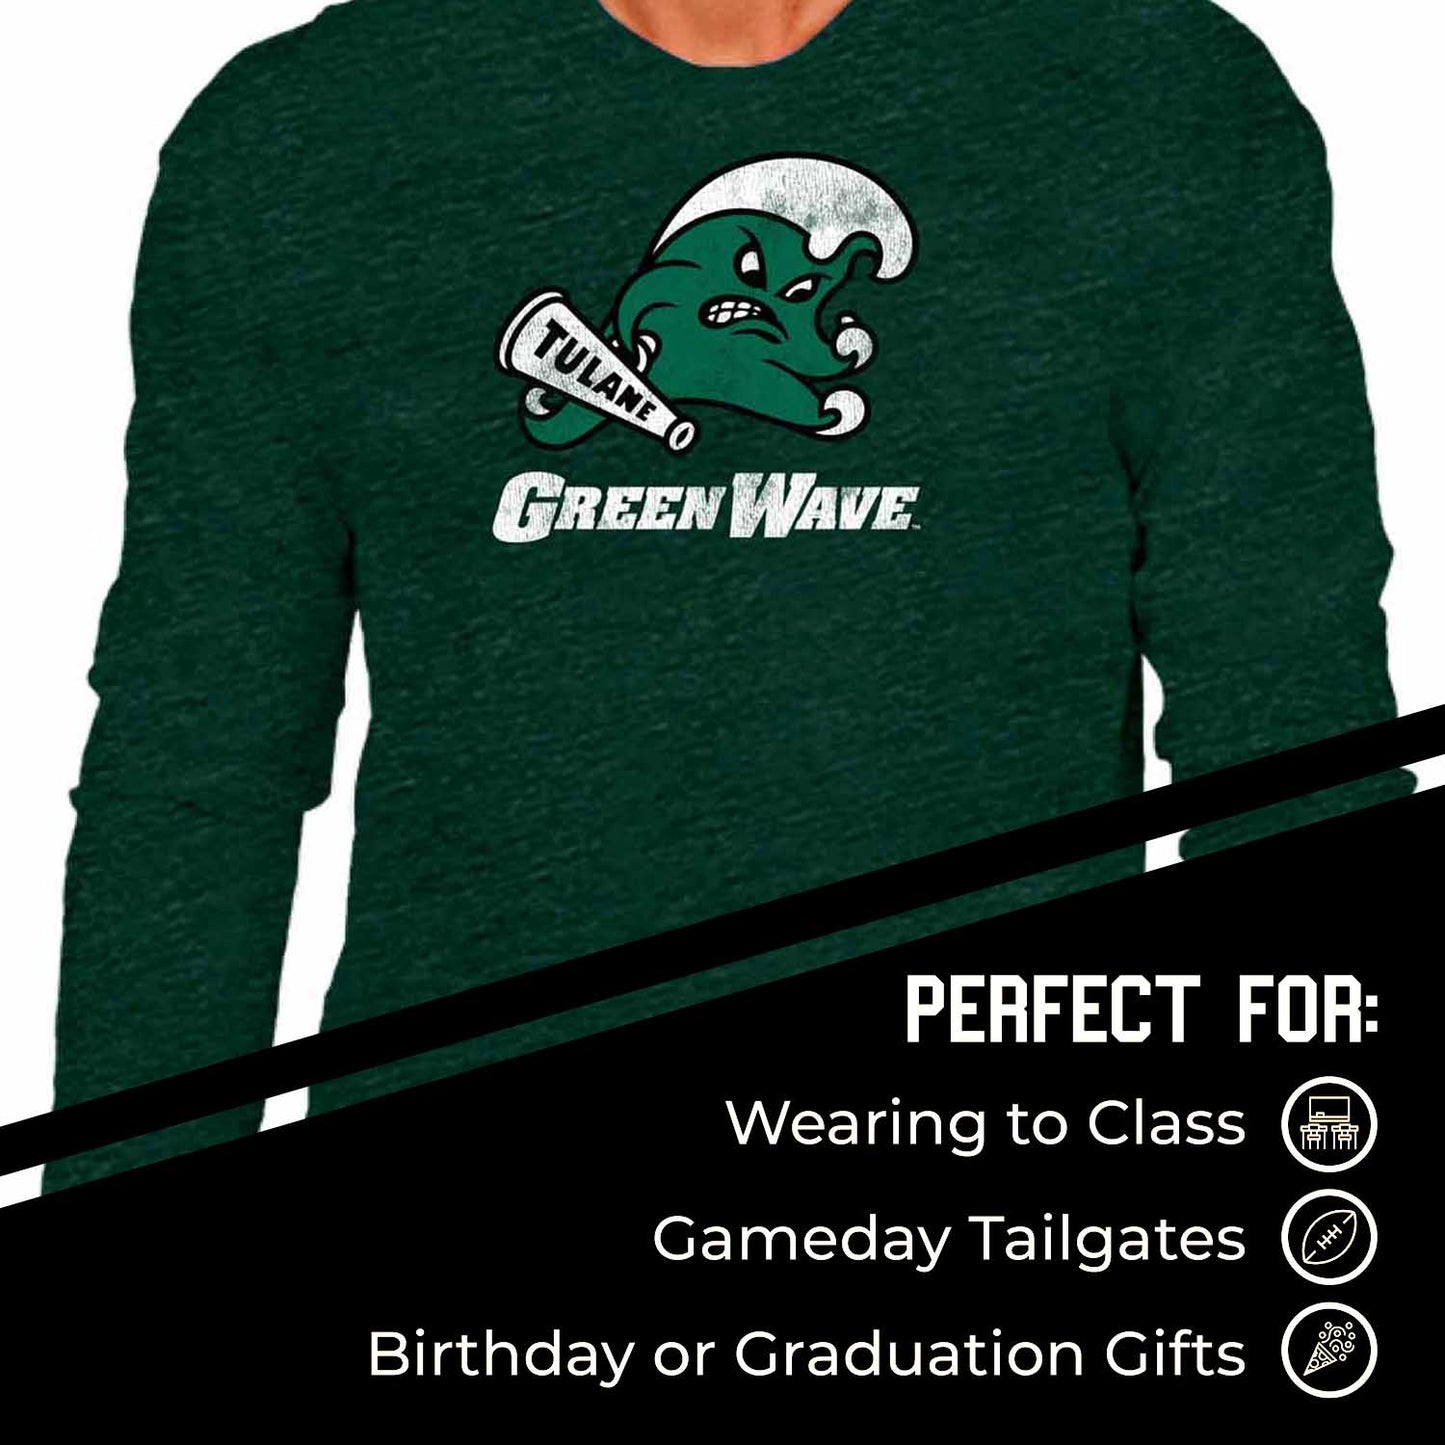 Tulane Green Wave NCAA MVP Adult Long-Sleeve Shirt - Green